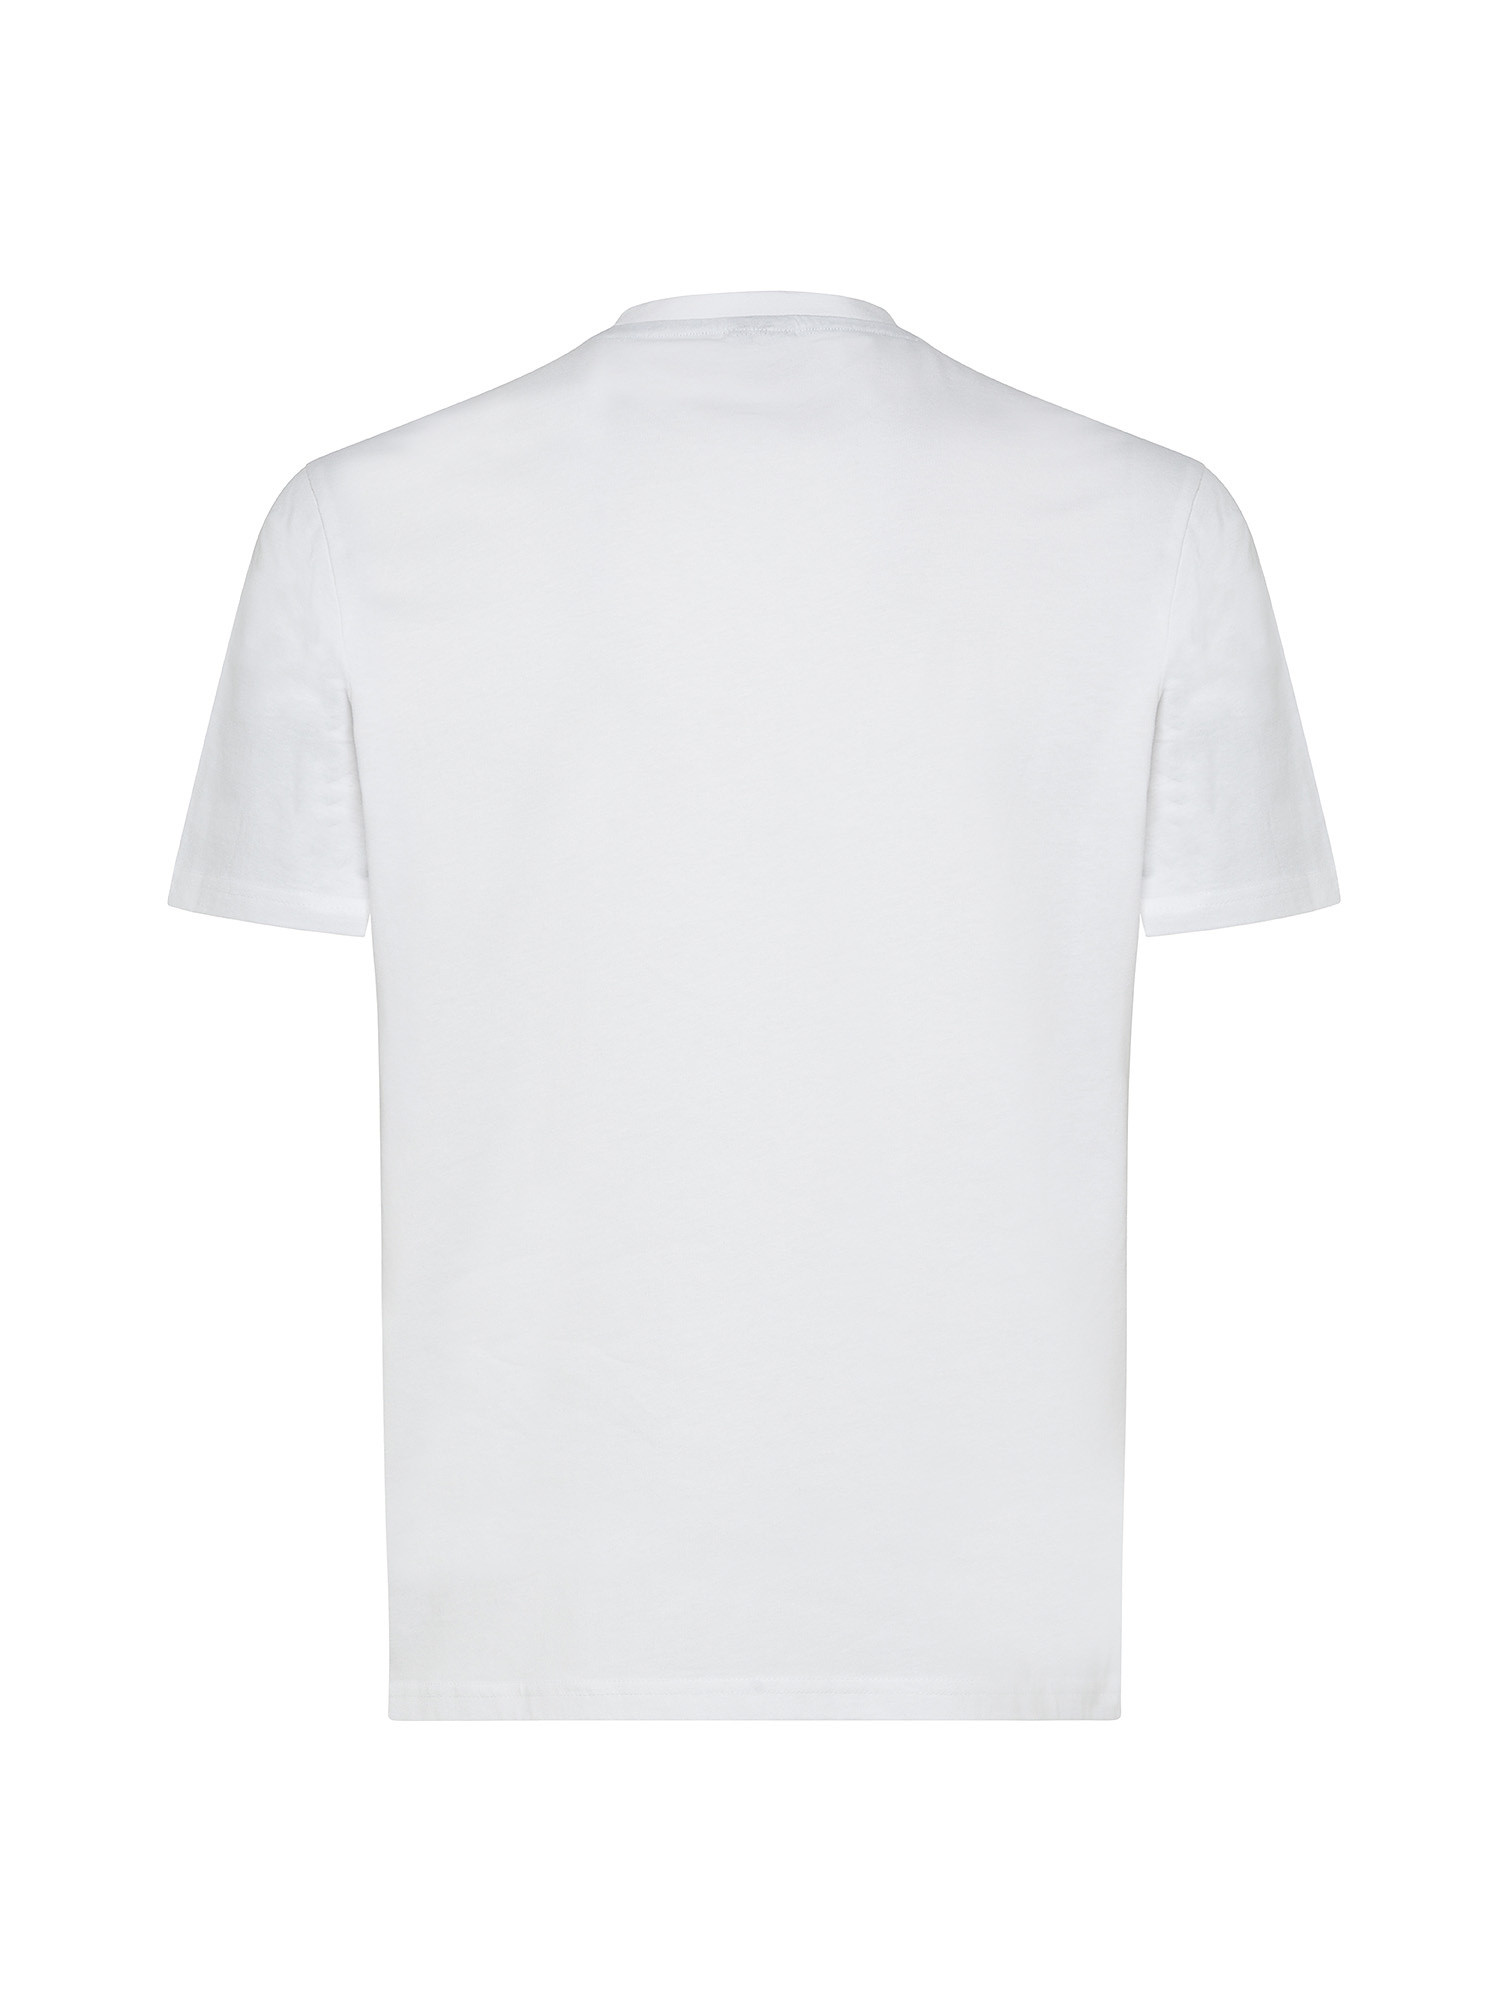 North sails - T-shirt in jersey di cotone organico con maxi logo stampato, Bianco, large image number 1